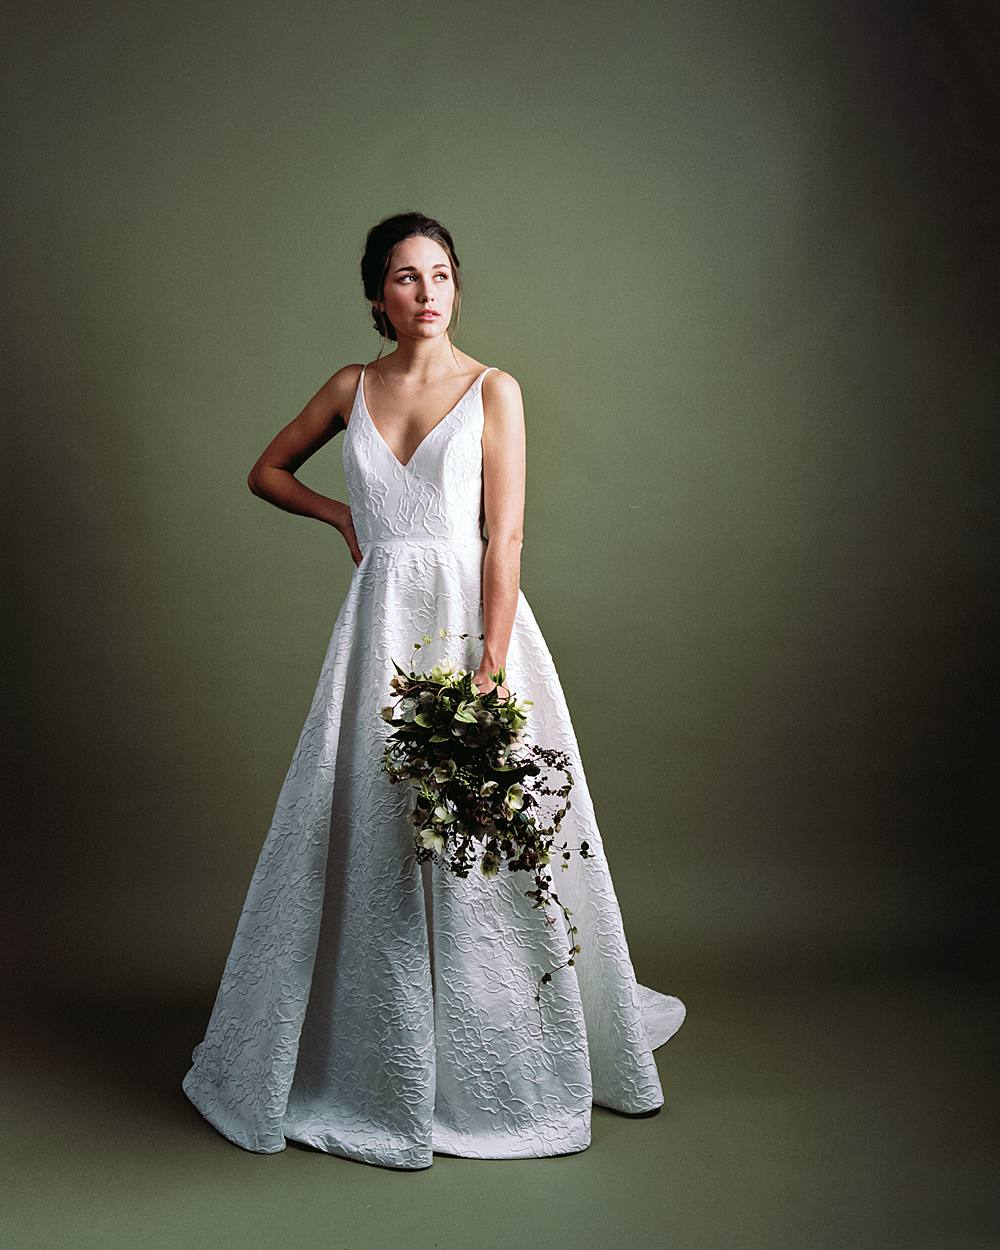 2002 charleston studio bridal portrait green seamless florals kodak portra 160 film strobes 00027_web